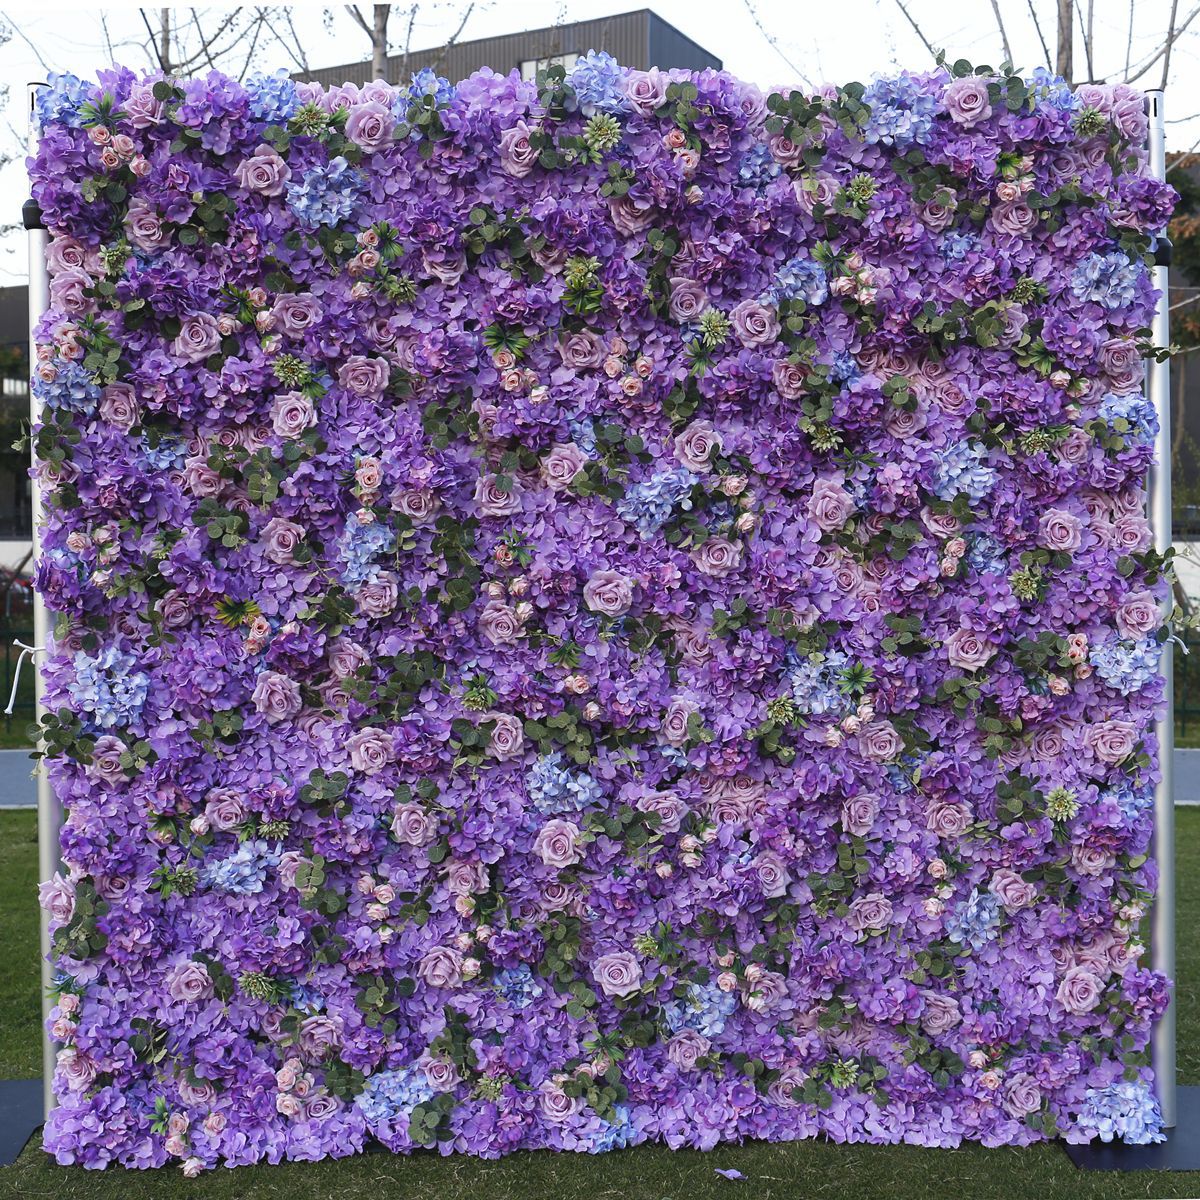 Kain ungu tembok ngisor kembang simulasi kembang latar mburi tembok dekorasi pernikahan dekorasi jendela toko